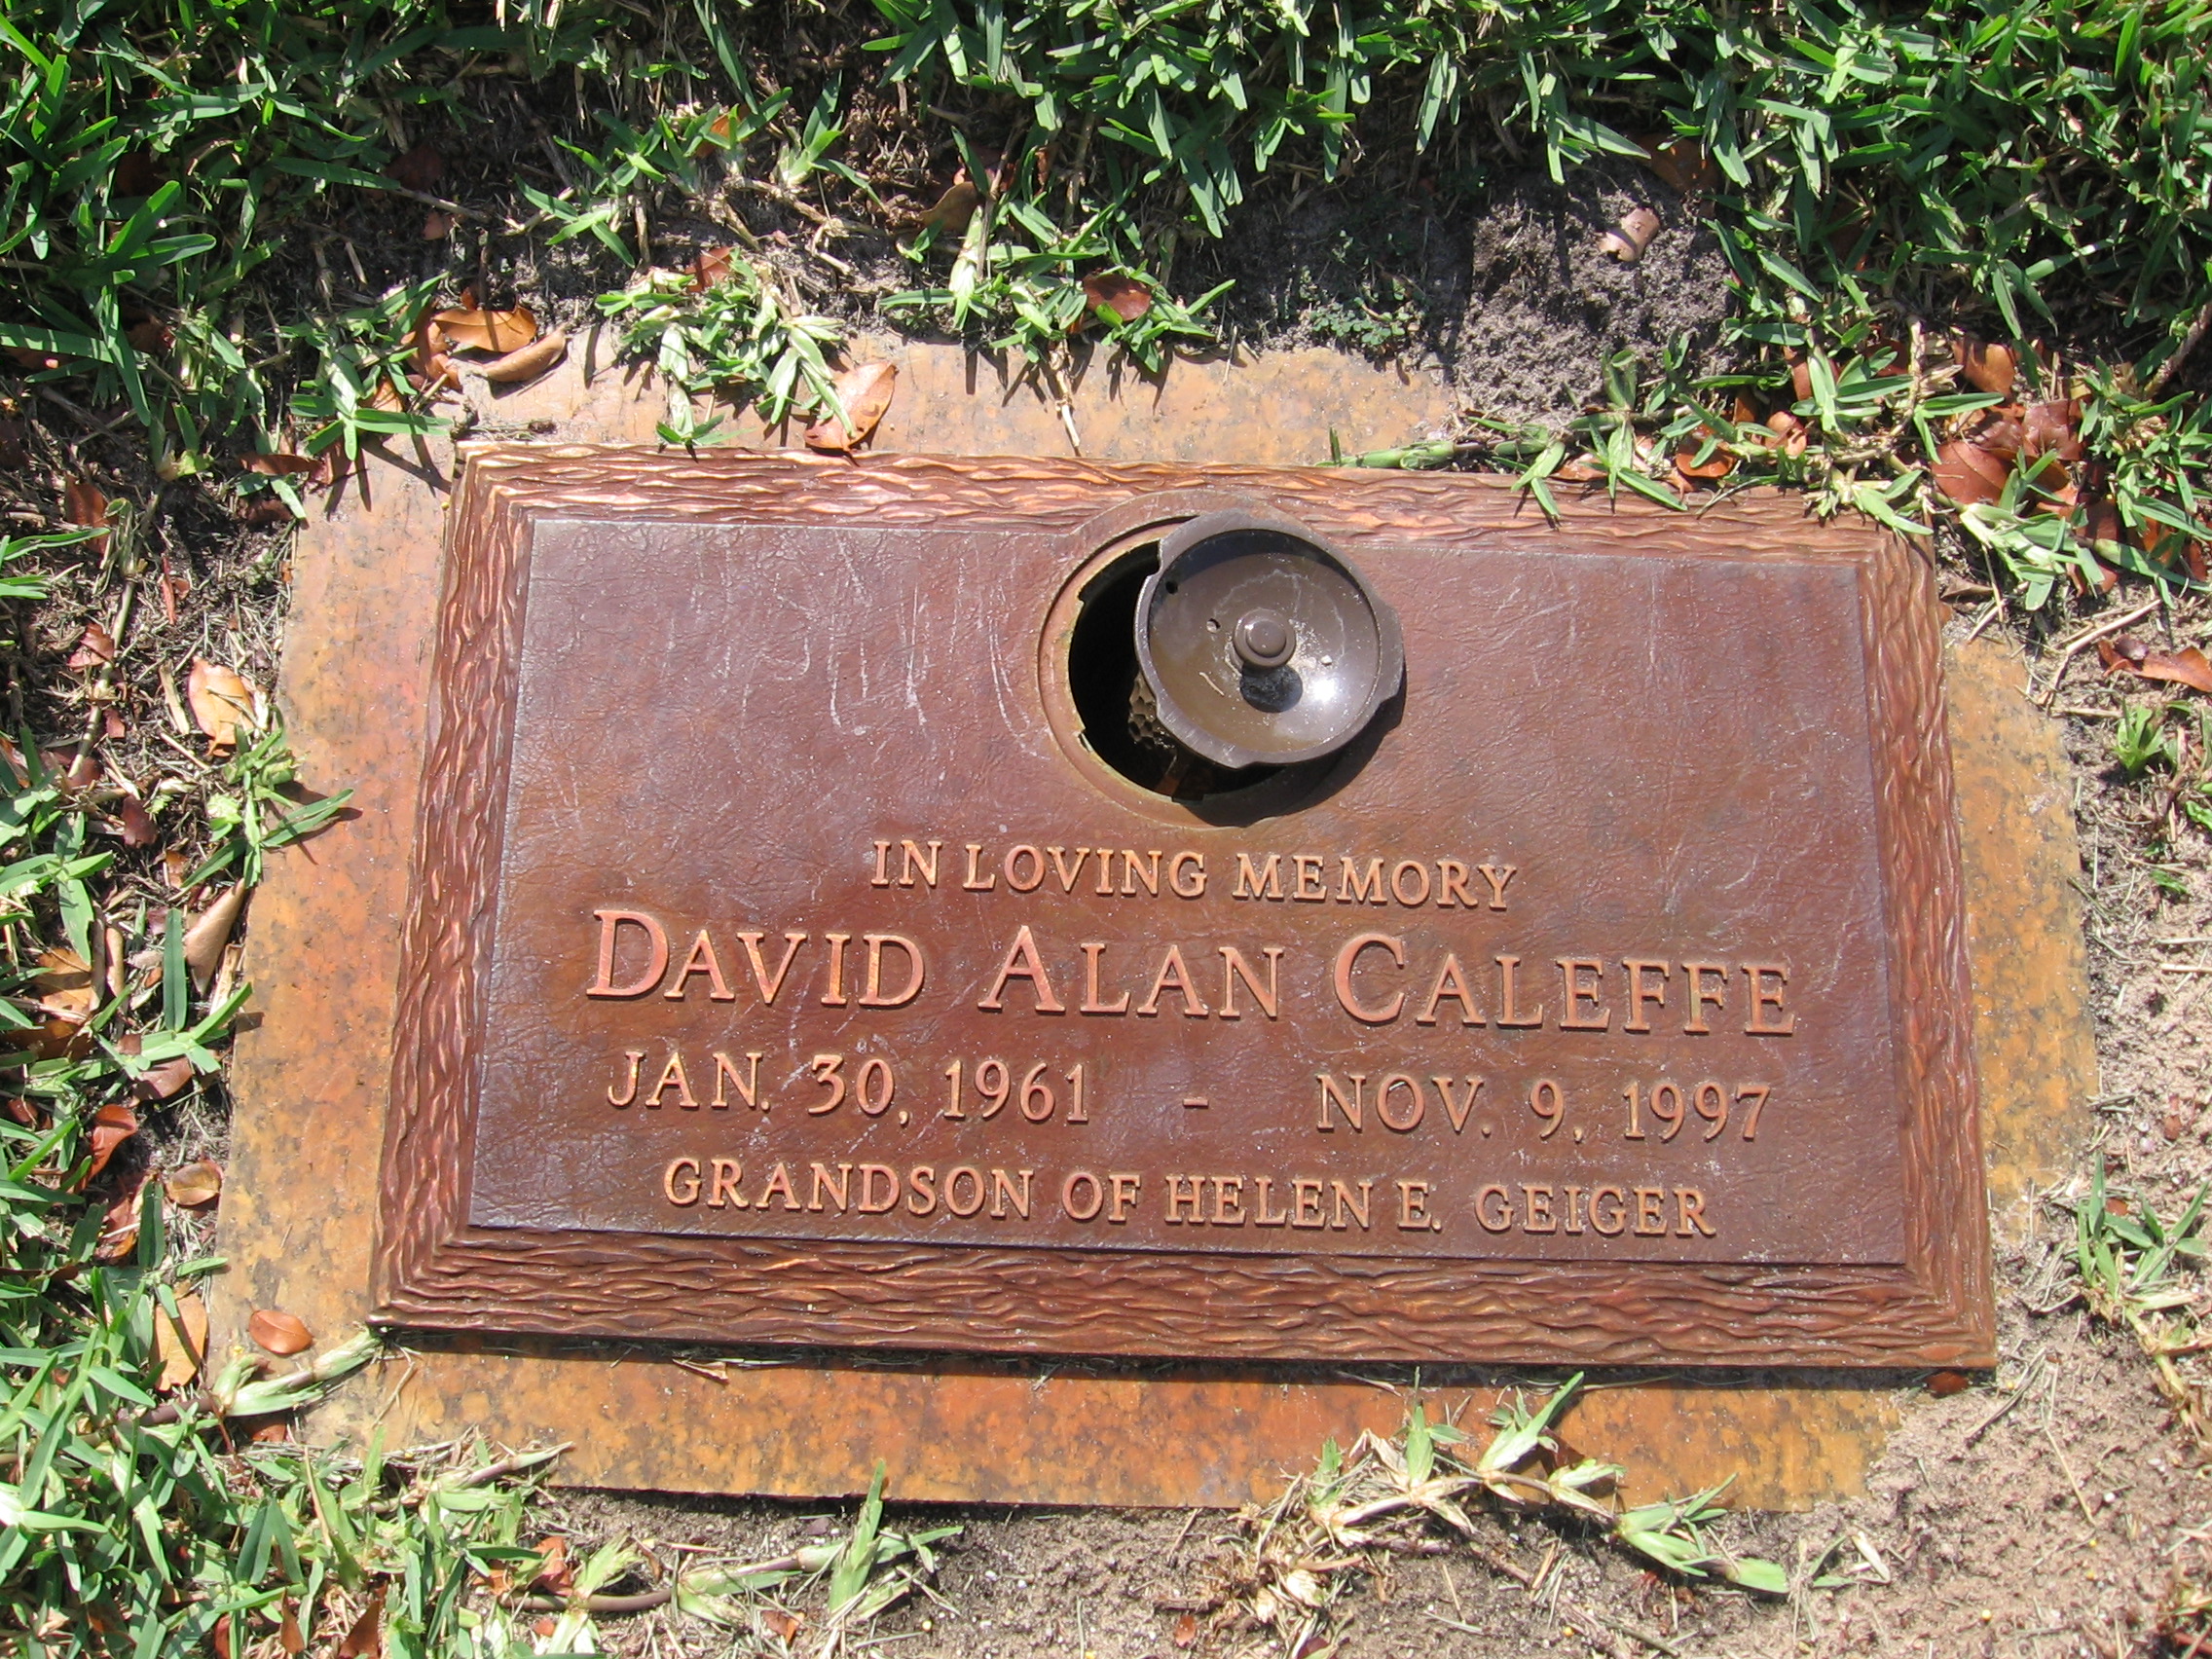 David Alan Caleffe